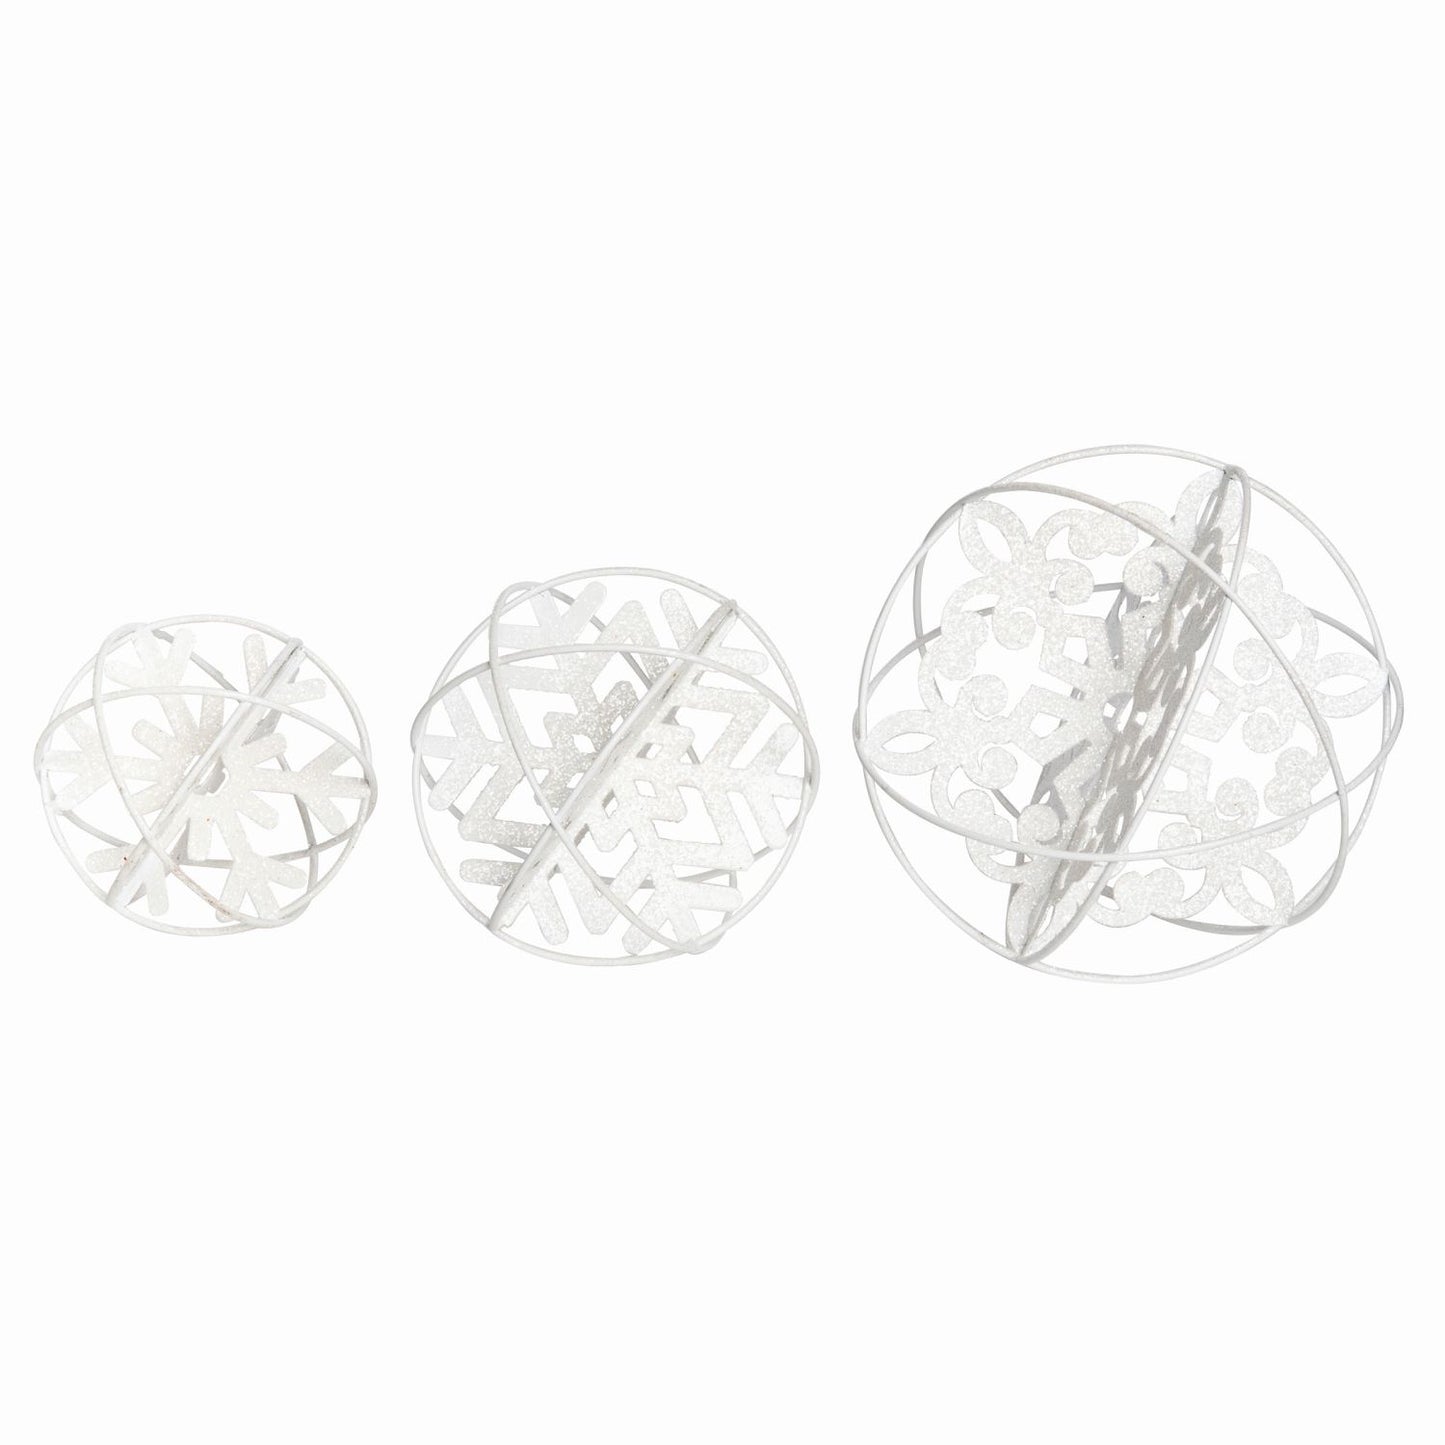 Transpac Metal Snowflake Orb Decor, Set Of 3